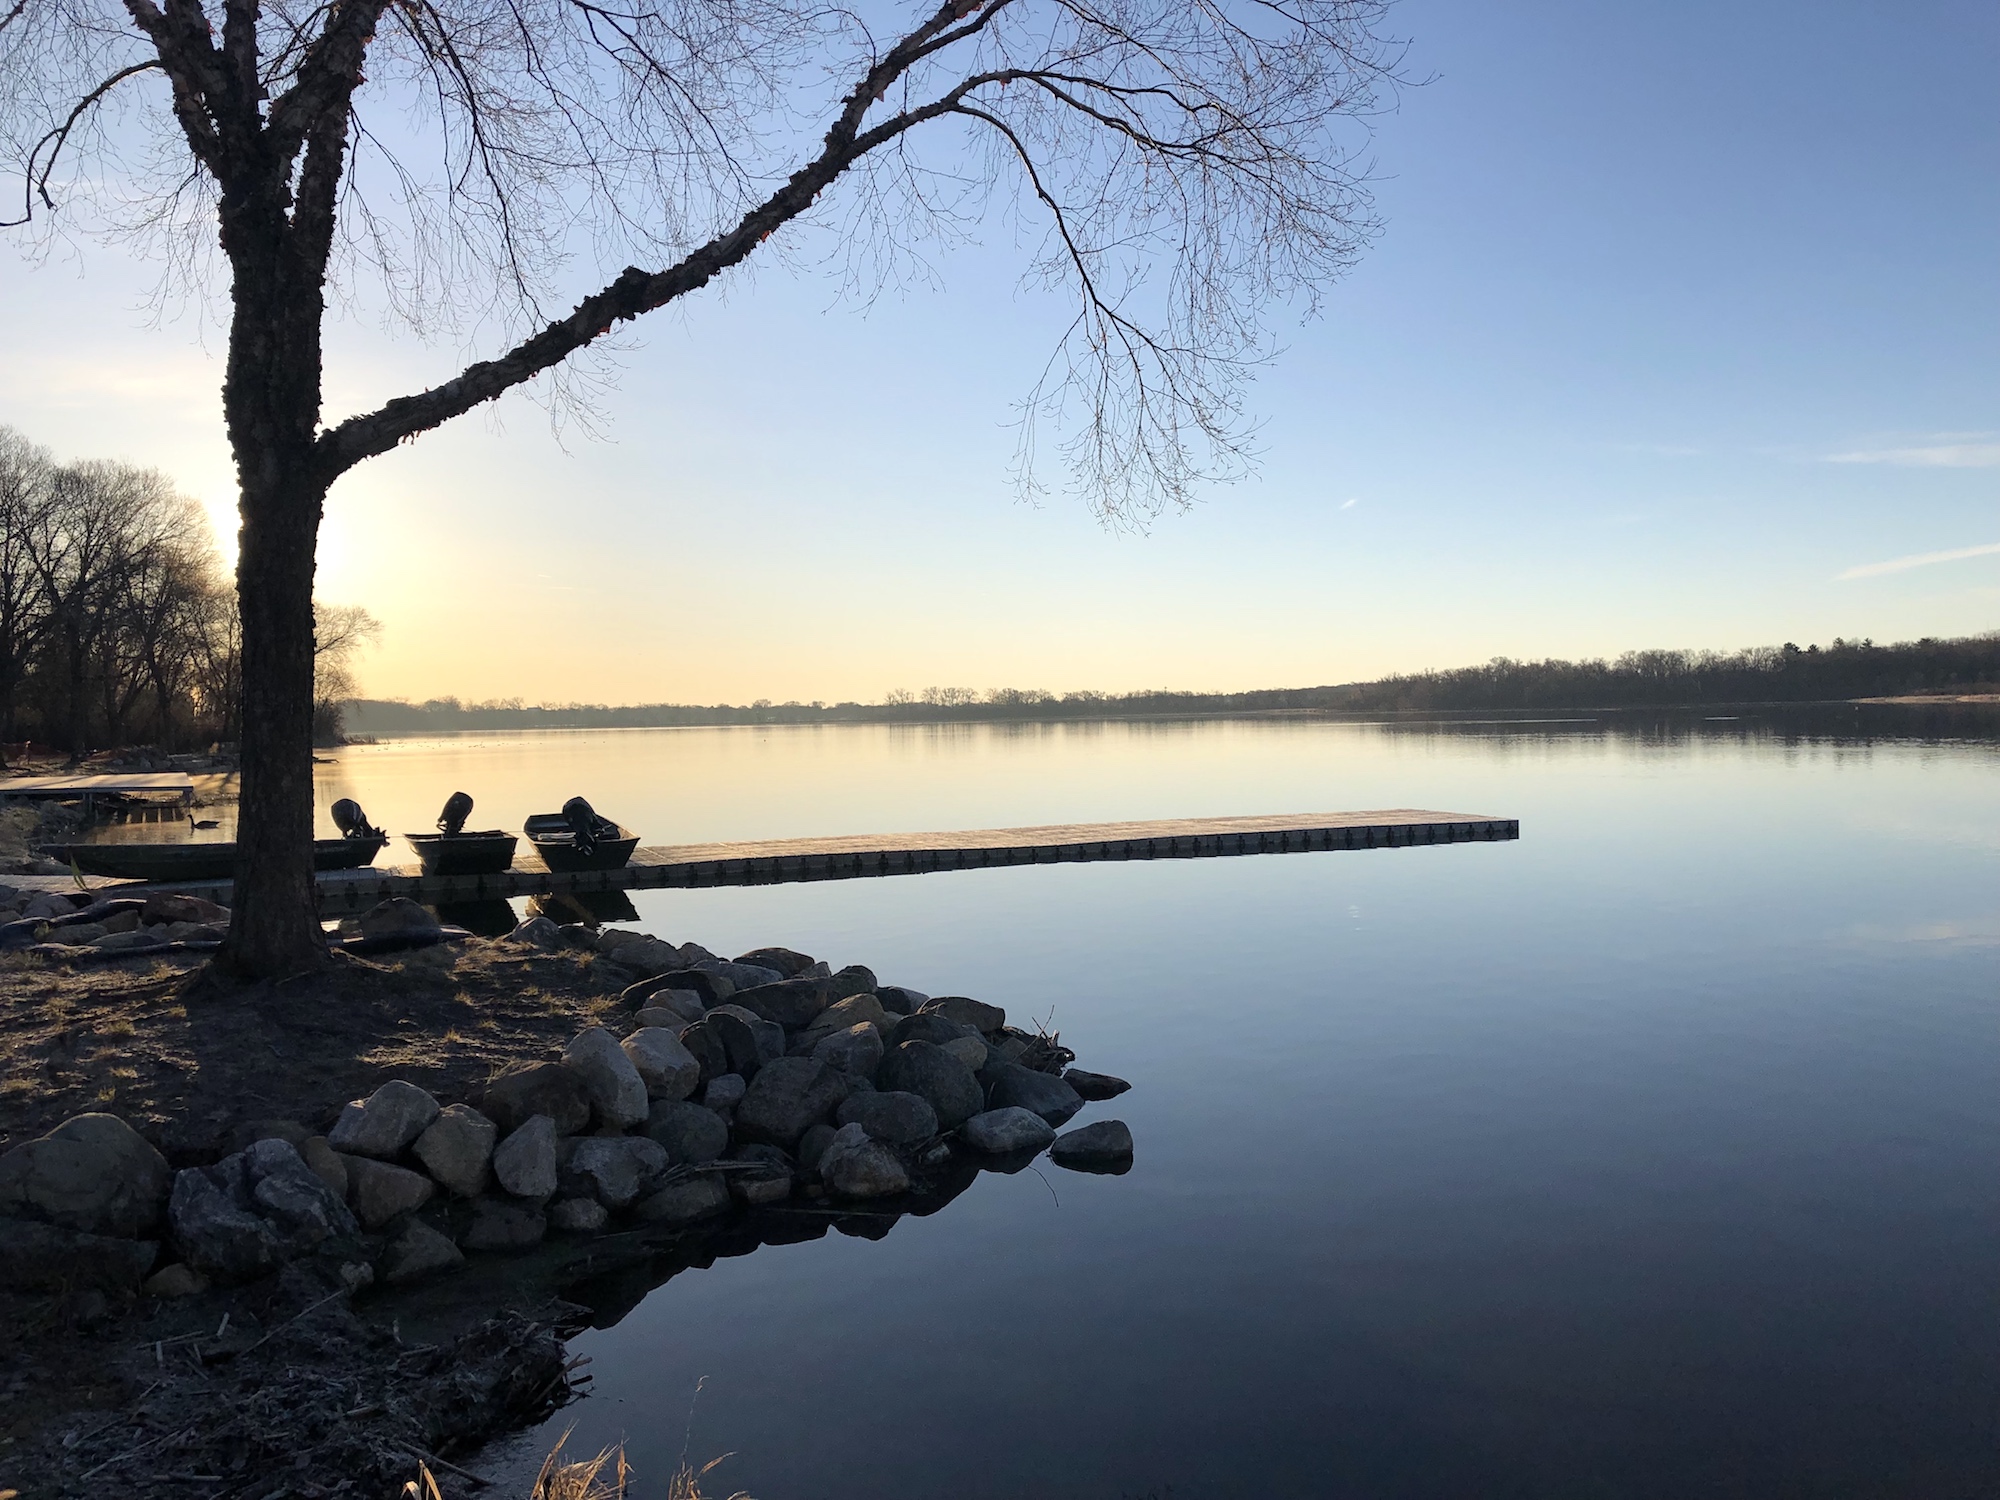 Lake Wingra on April 15, 2019.